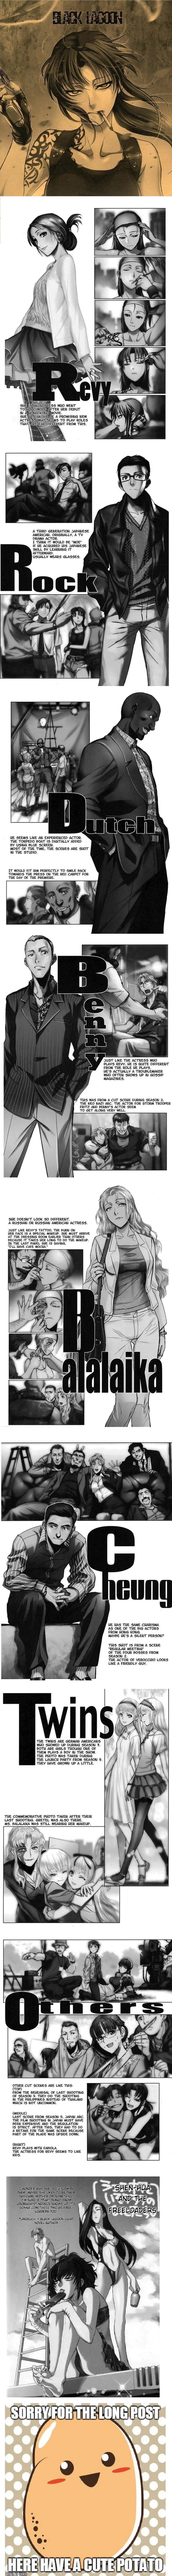 Behind the Scenes!! (manga) - Anime News Network